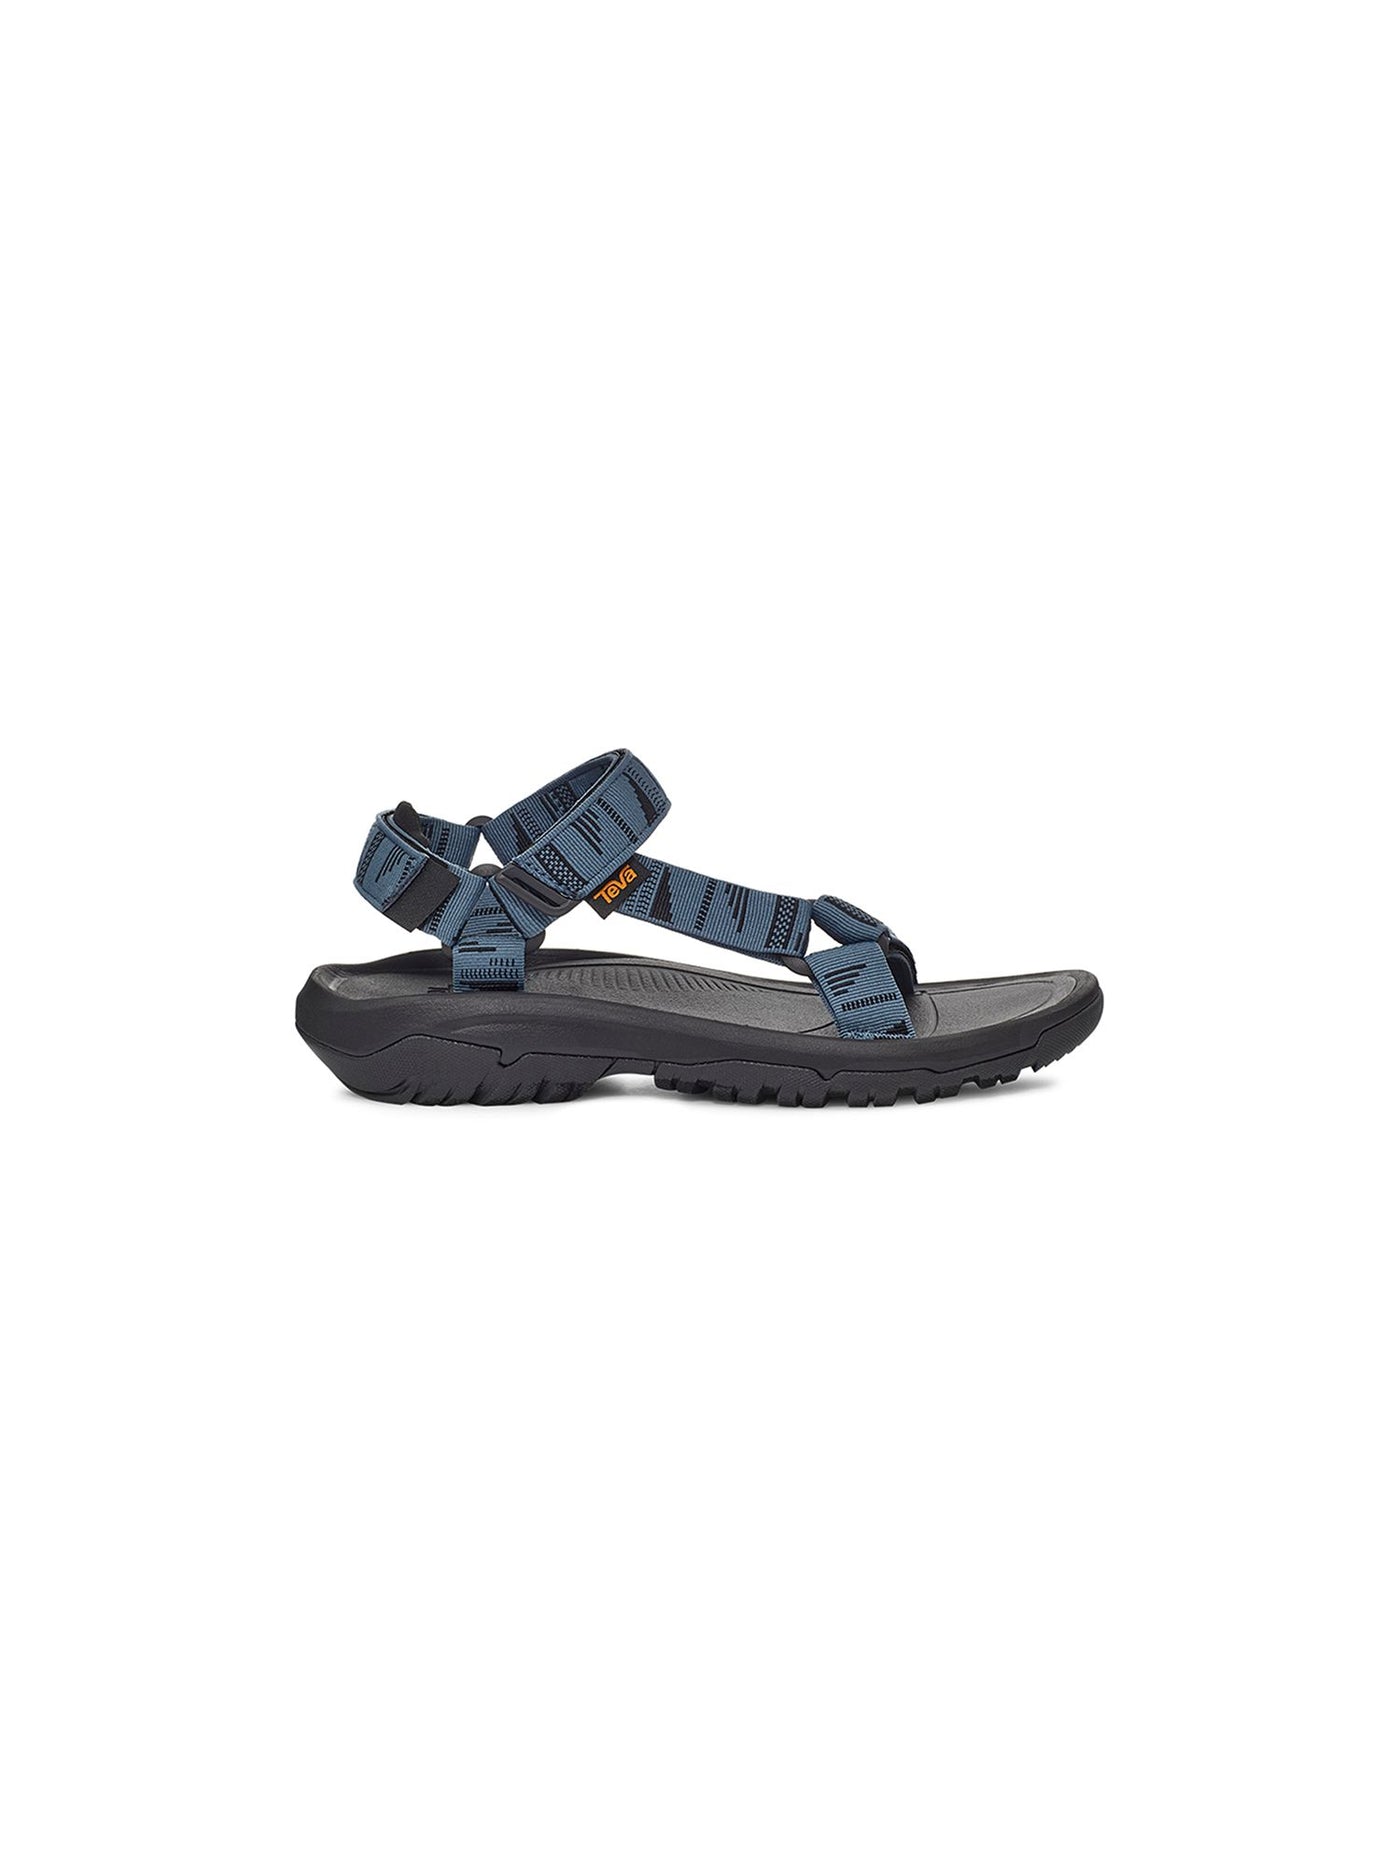 TEVA Mens Blue Printed Padded Water Resistant Non-Slip Hurricane Xlt2 Open Toe Sandals Shoes 11